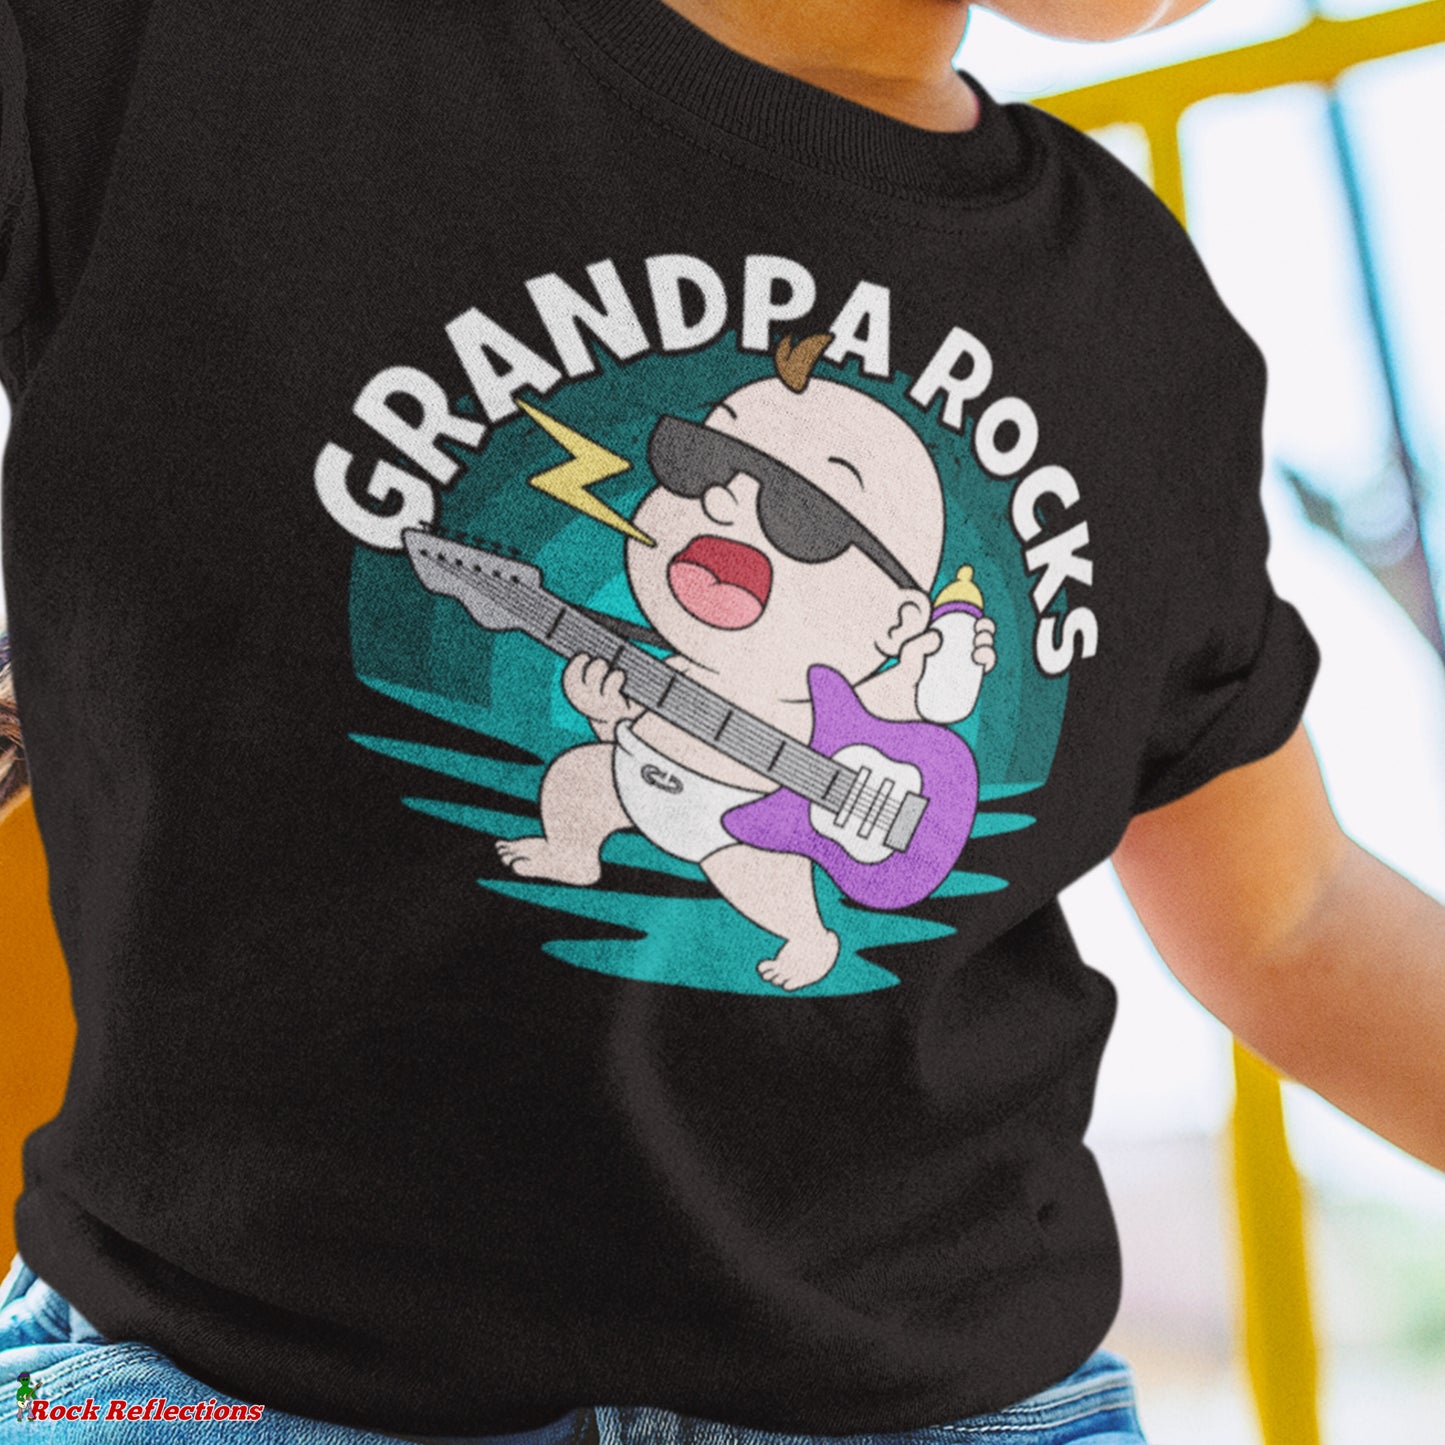 Grandpa Rocks Baby SPOD